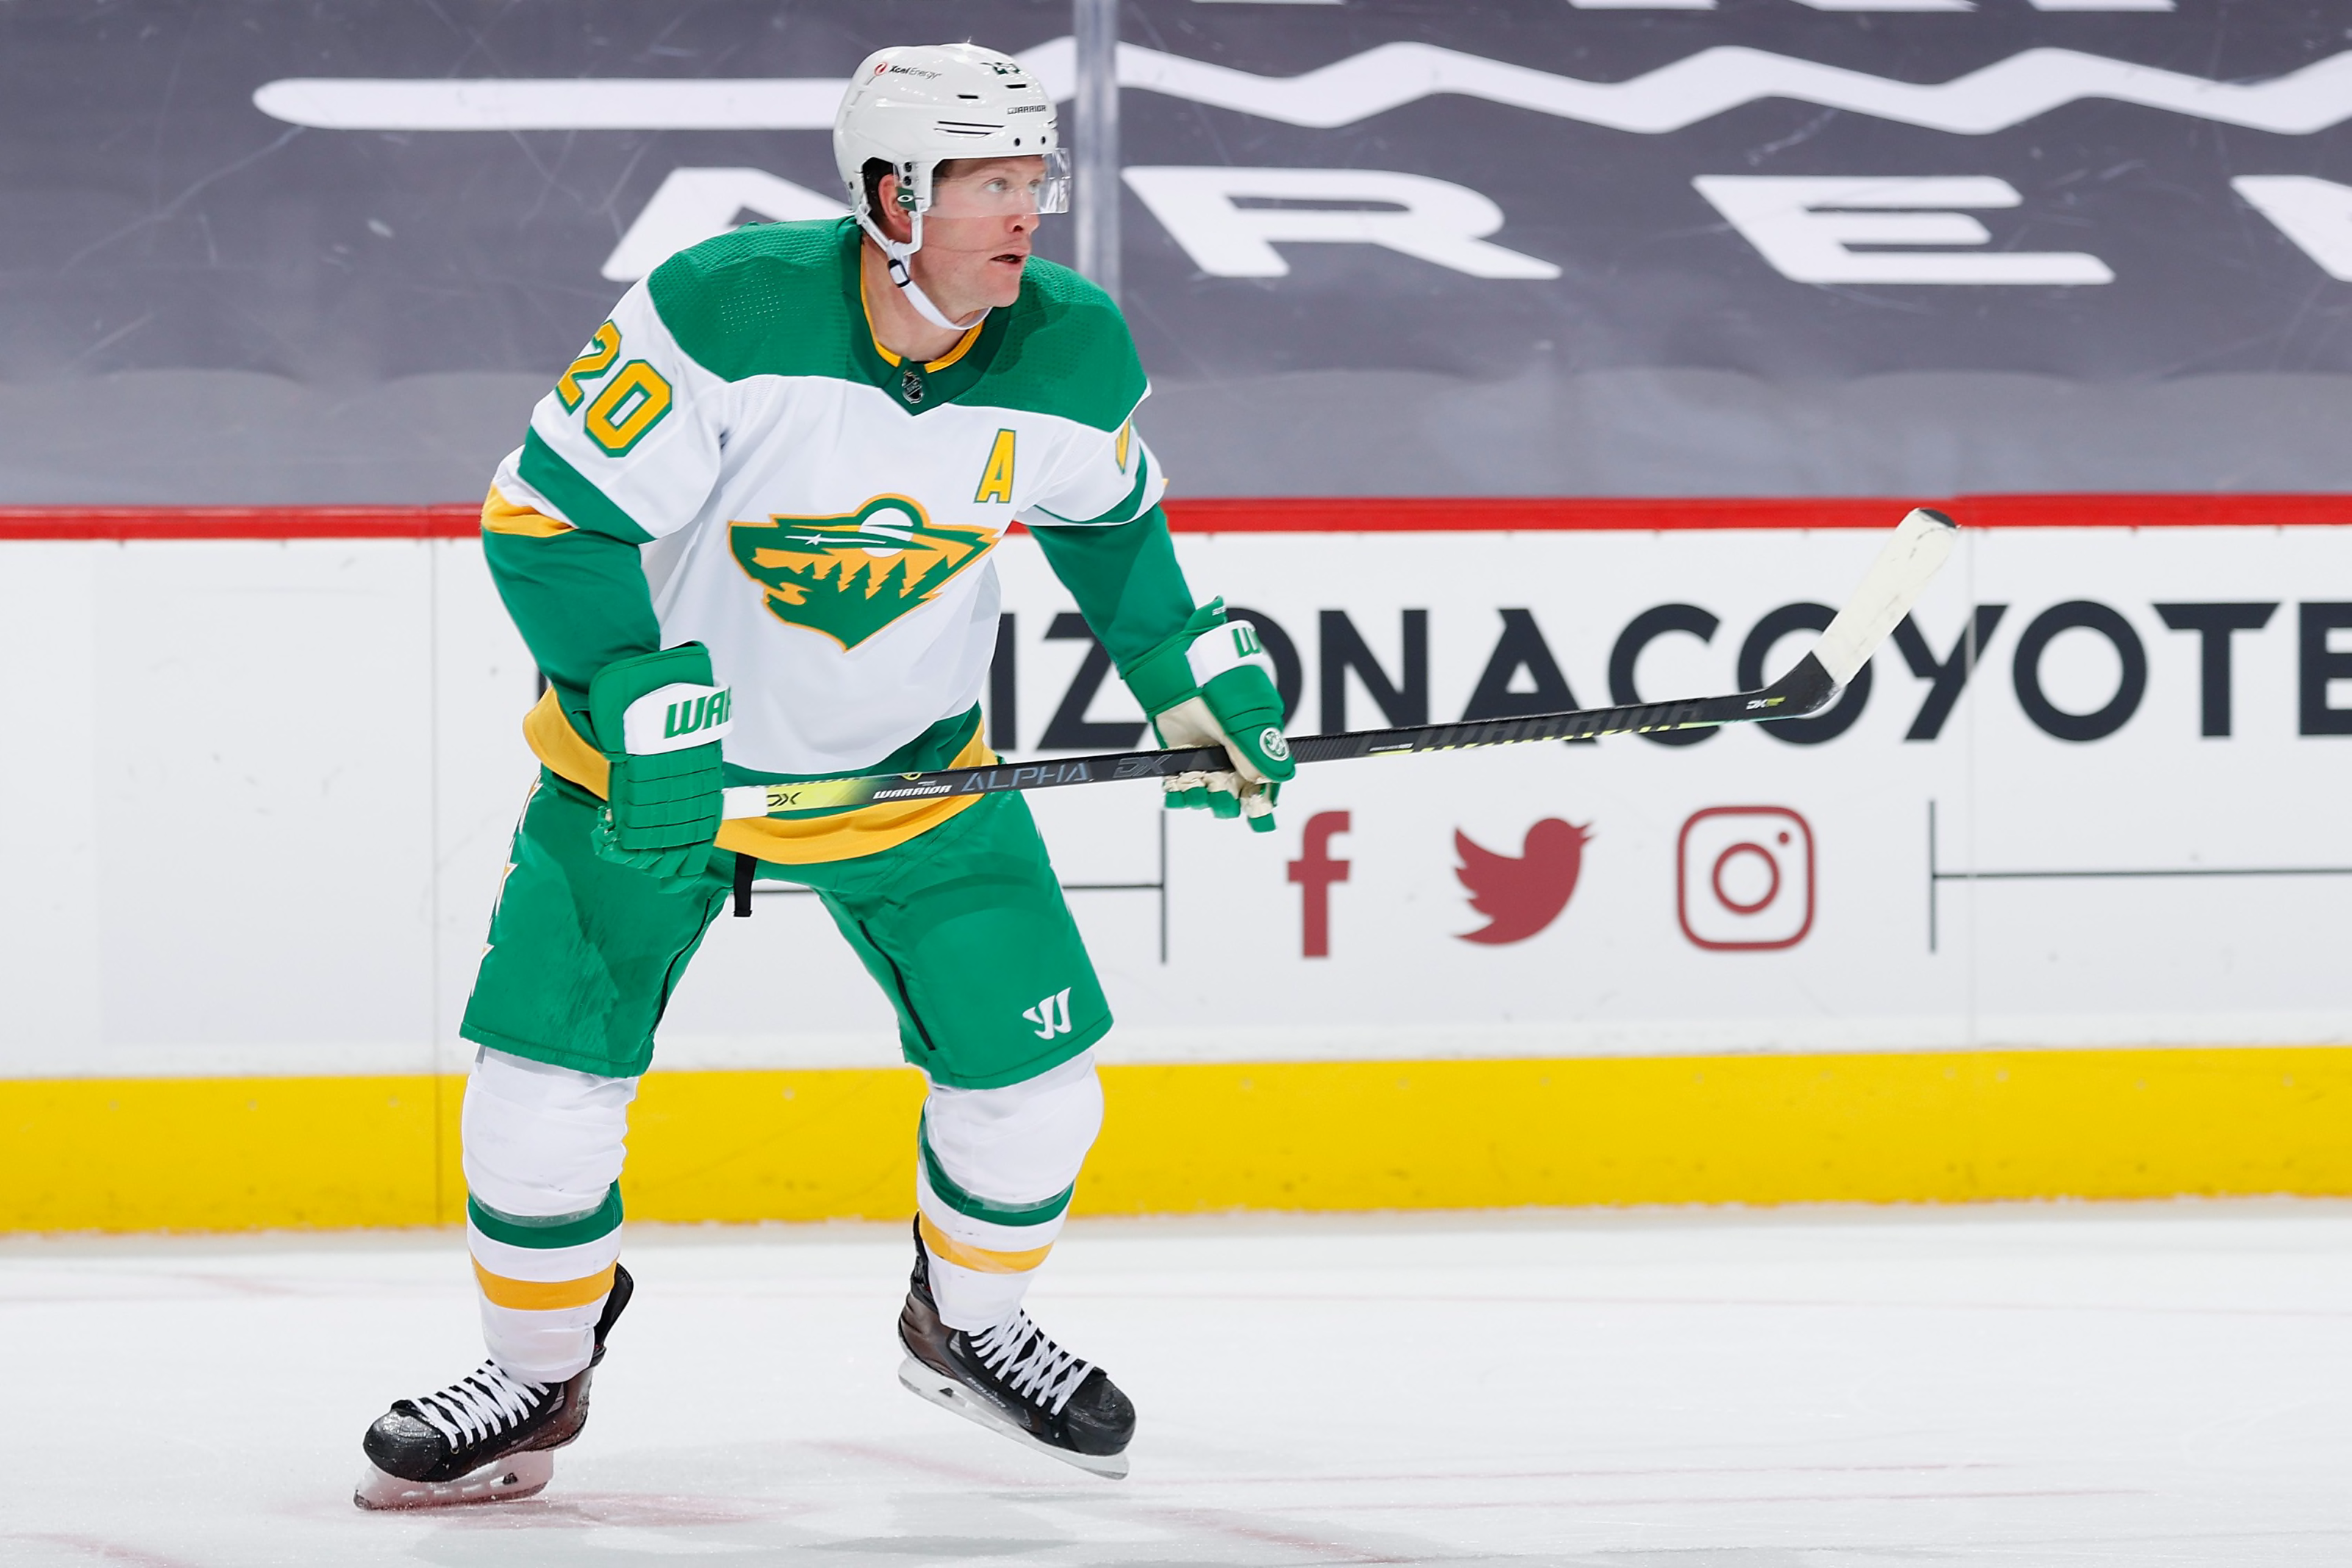 2 Potential Destinations for Zach Parise - NHL Trade Rumors